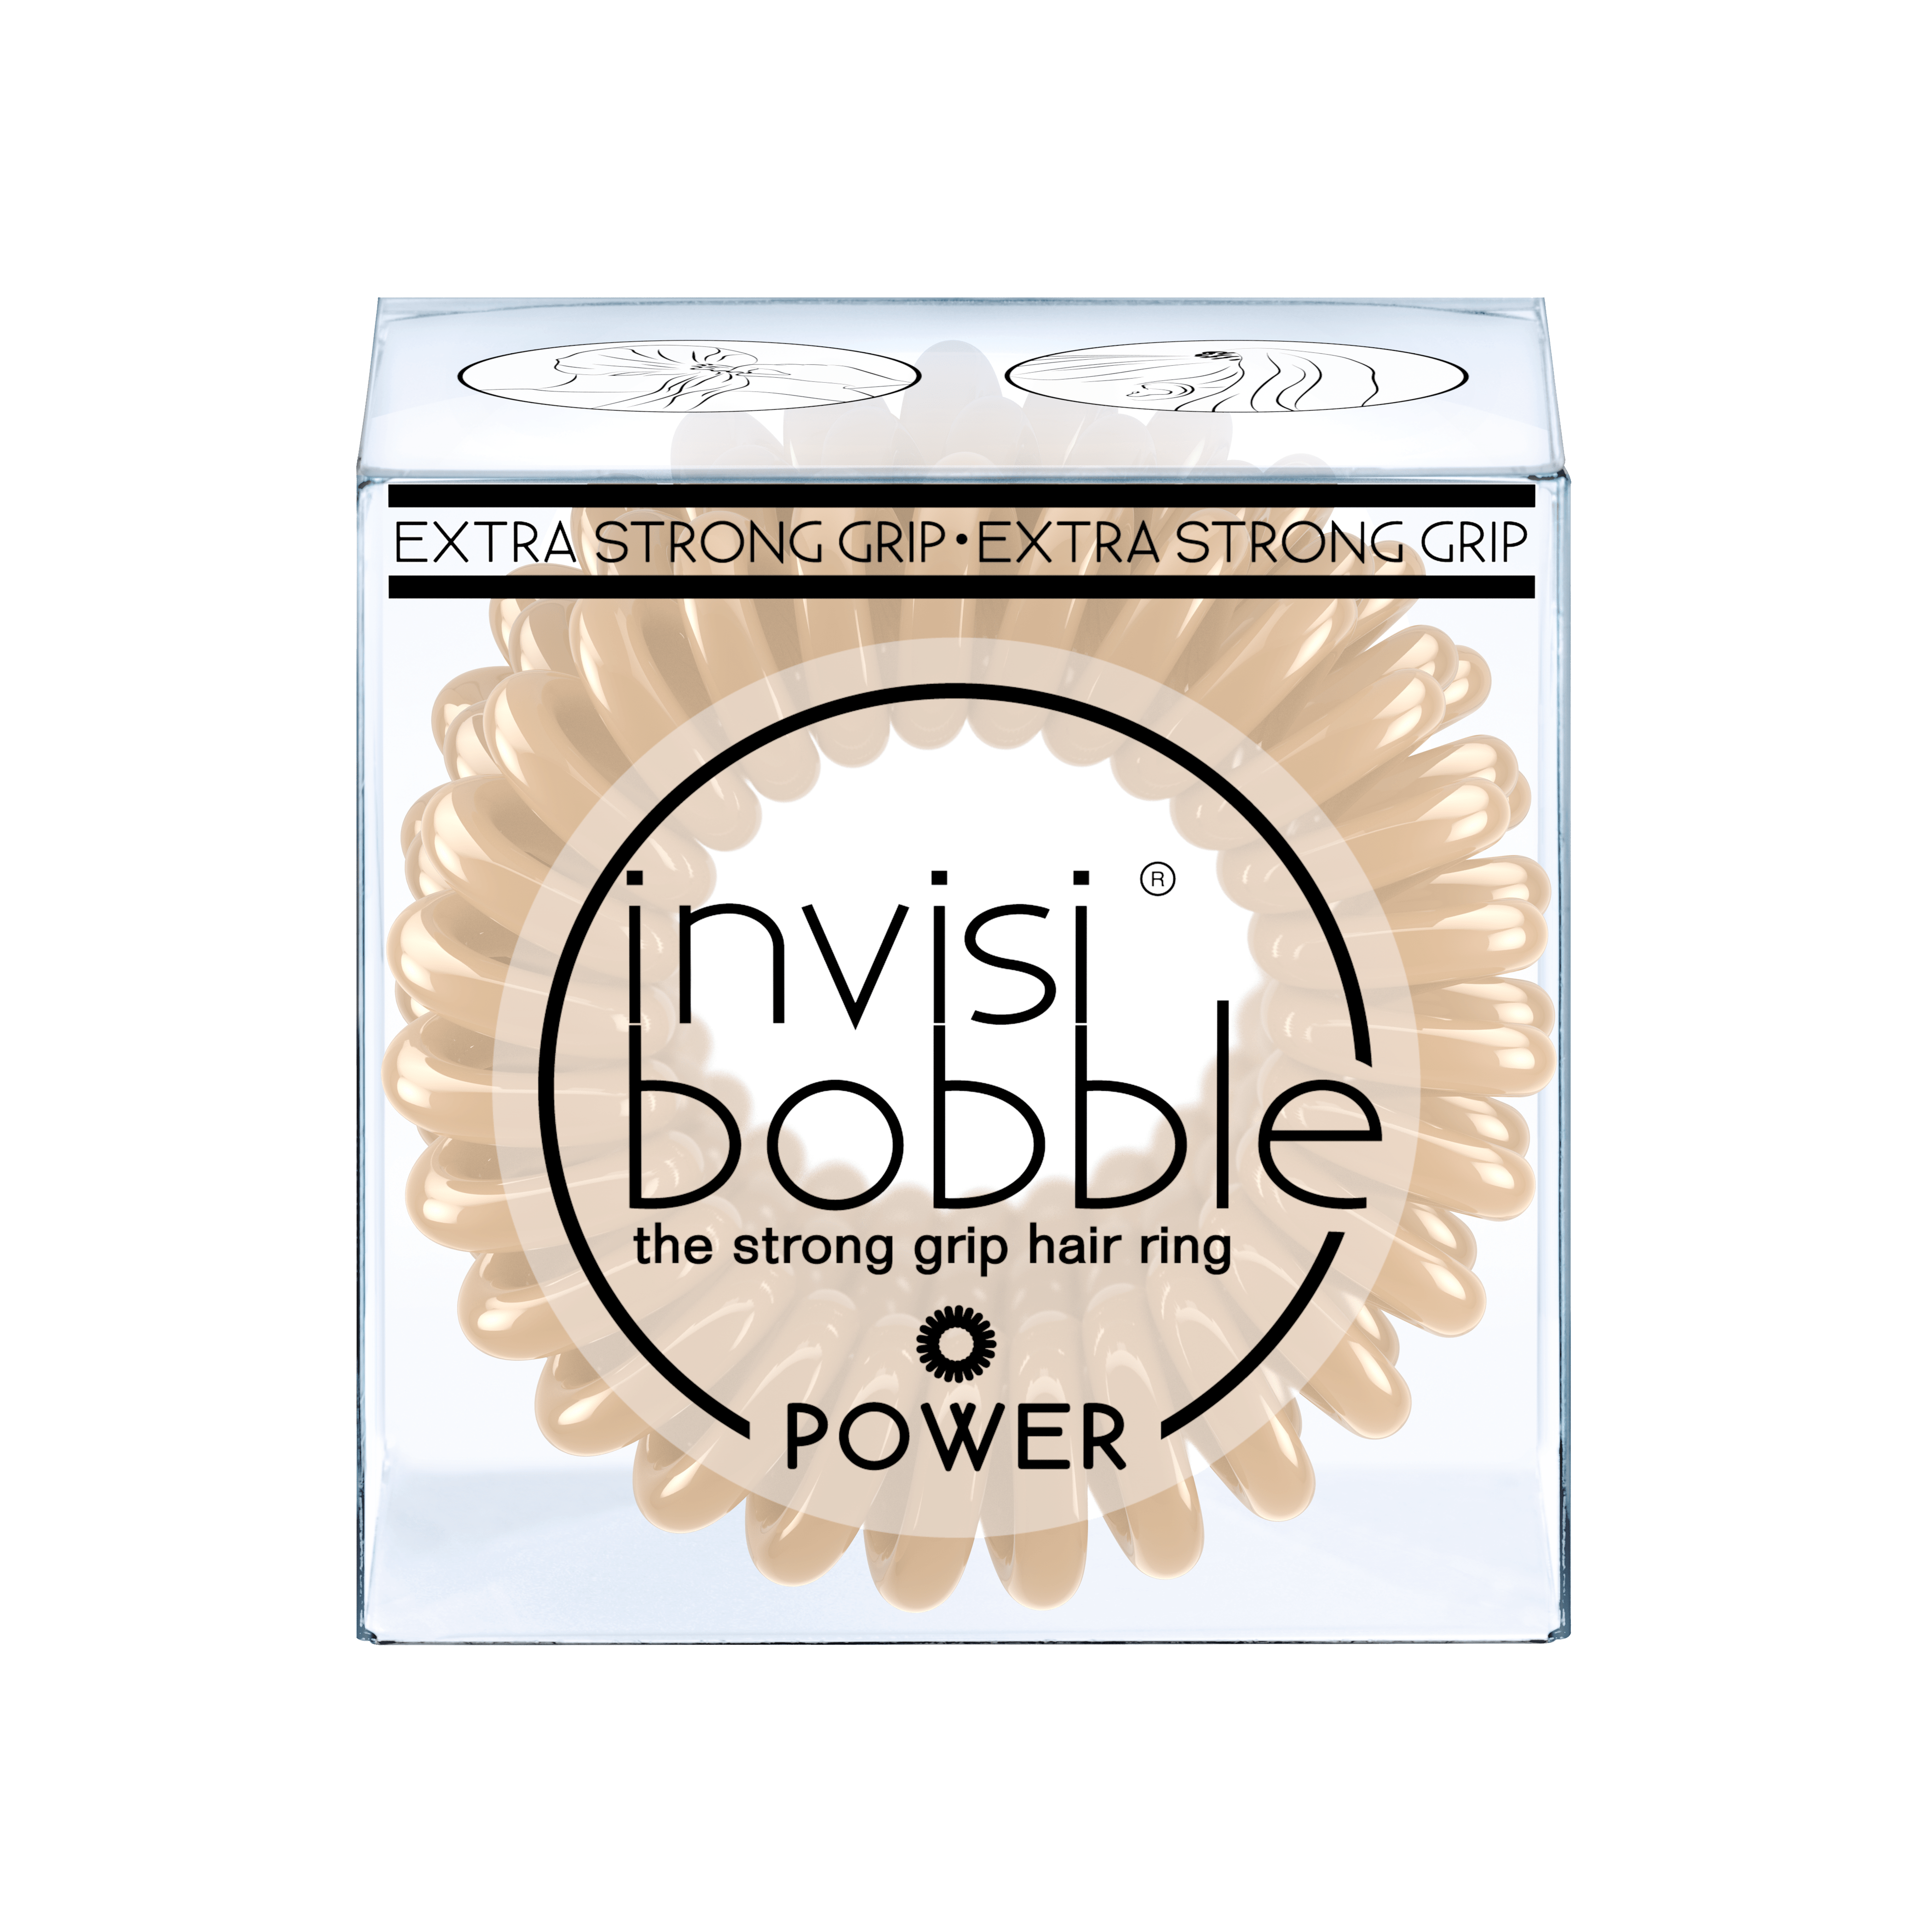 Invisibobble power - Alle Favoriten unter allen verglichenenInvisibobble power